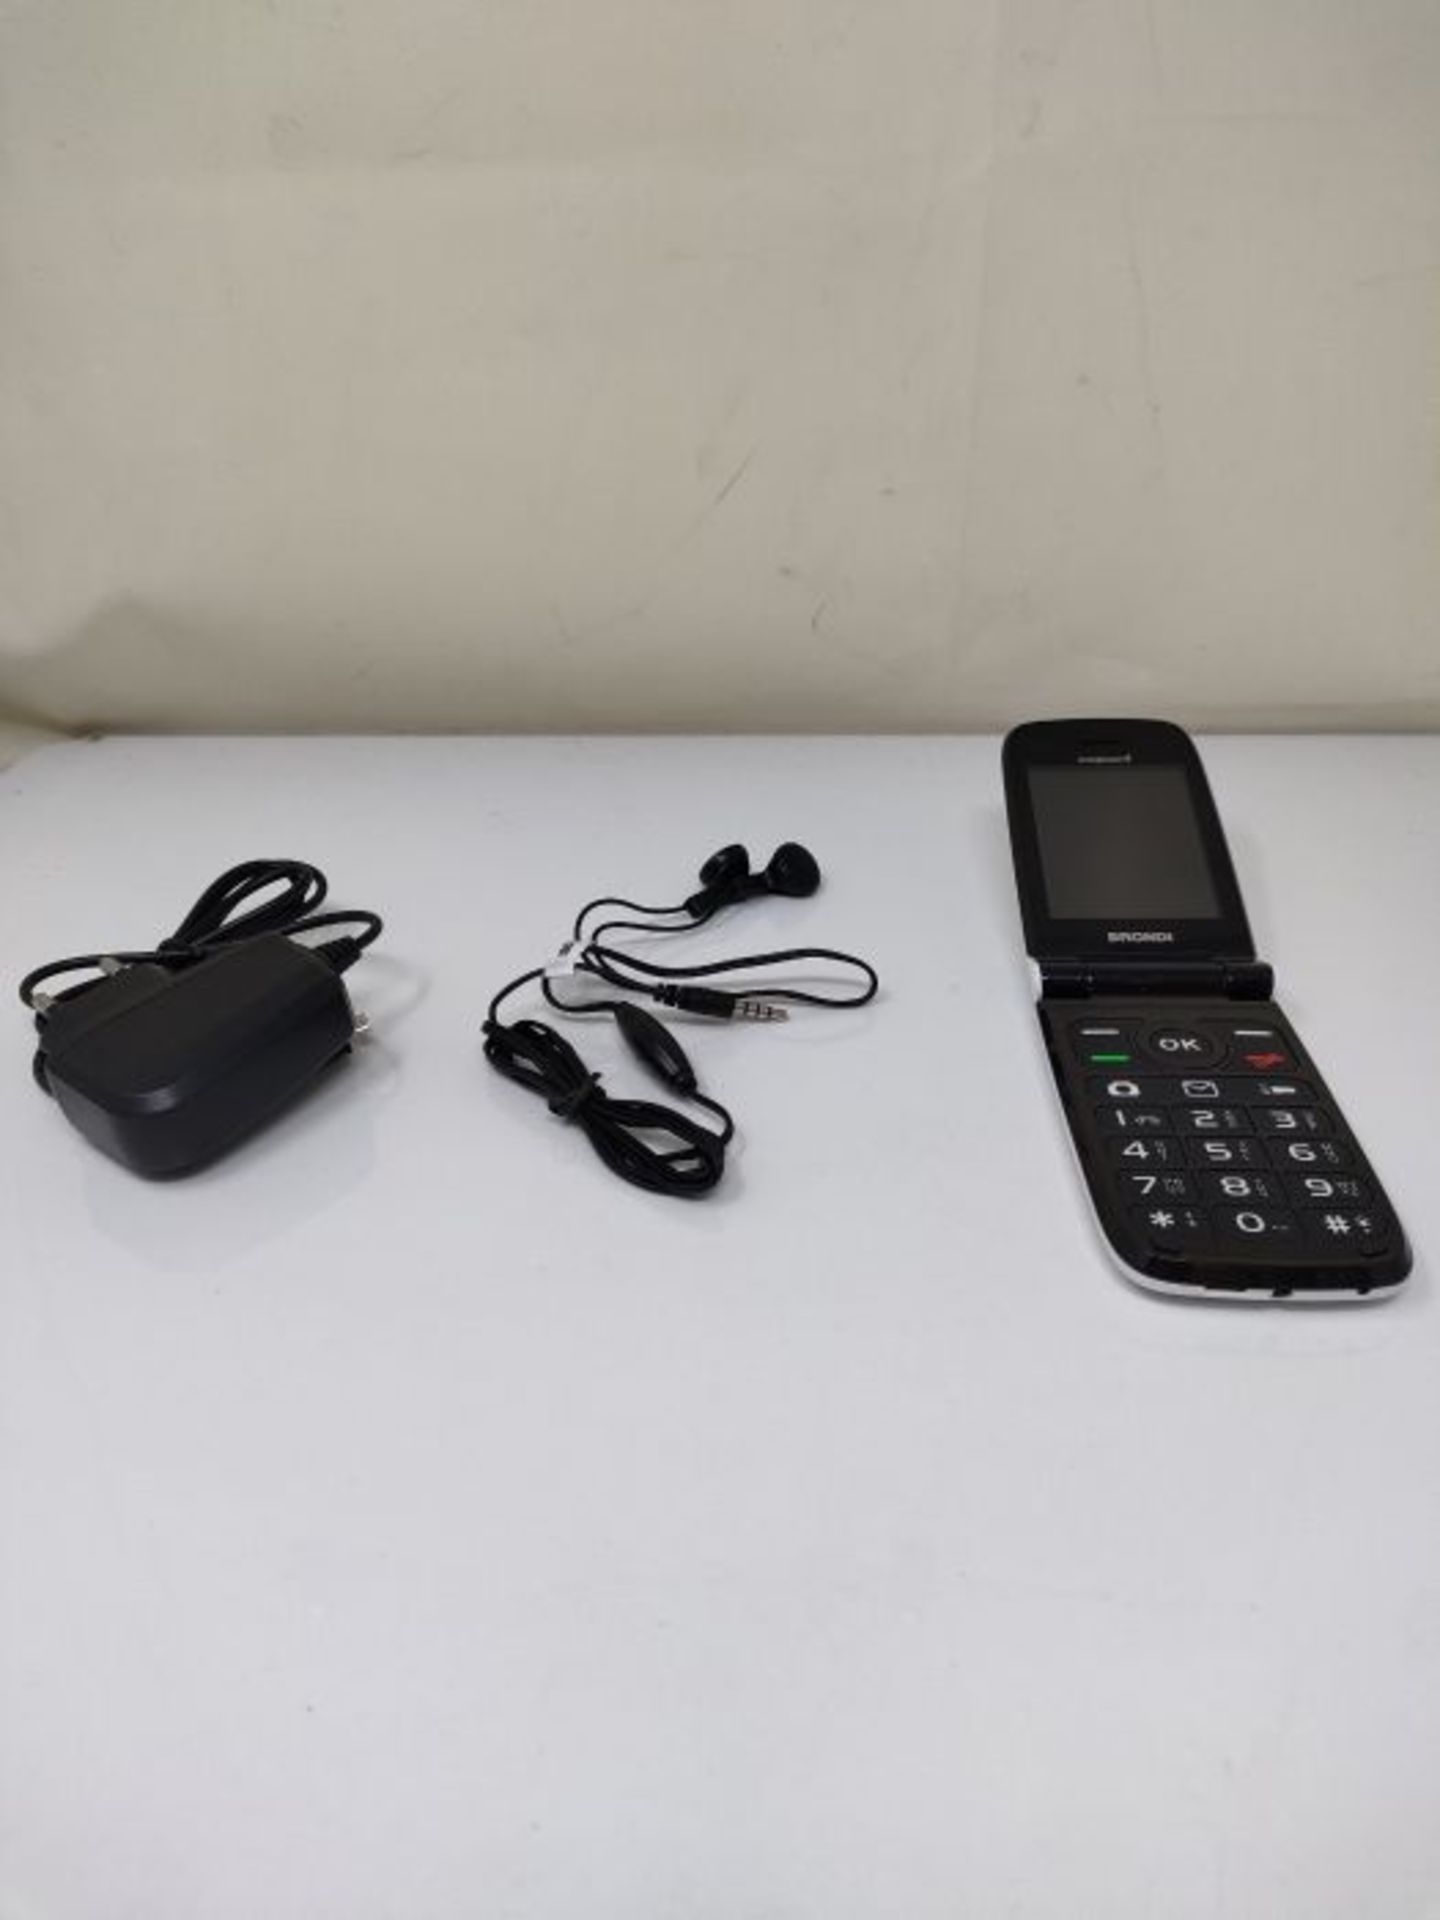 Brondi Magnum 4 Telefono Cellulare Maxi Display, Tastiera Fisica Retroilluminata, Dual - Image 3 of 3